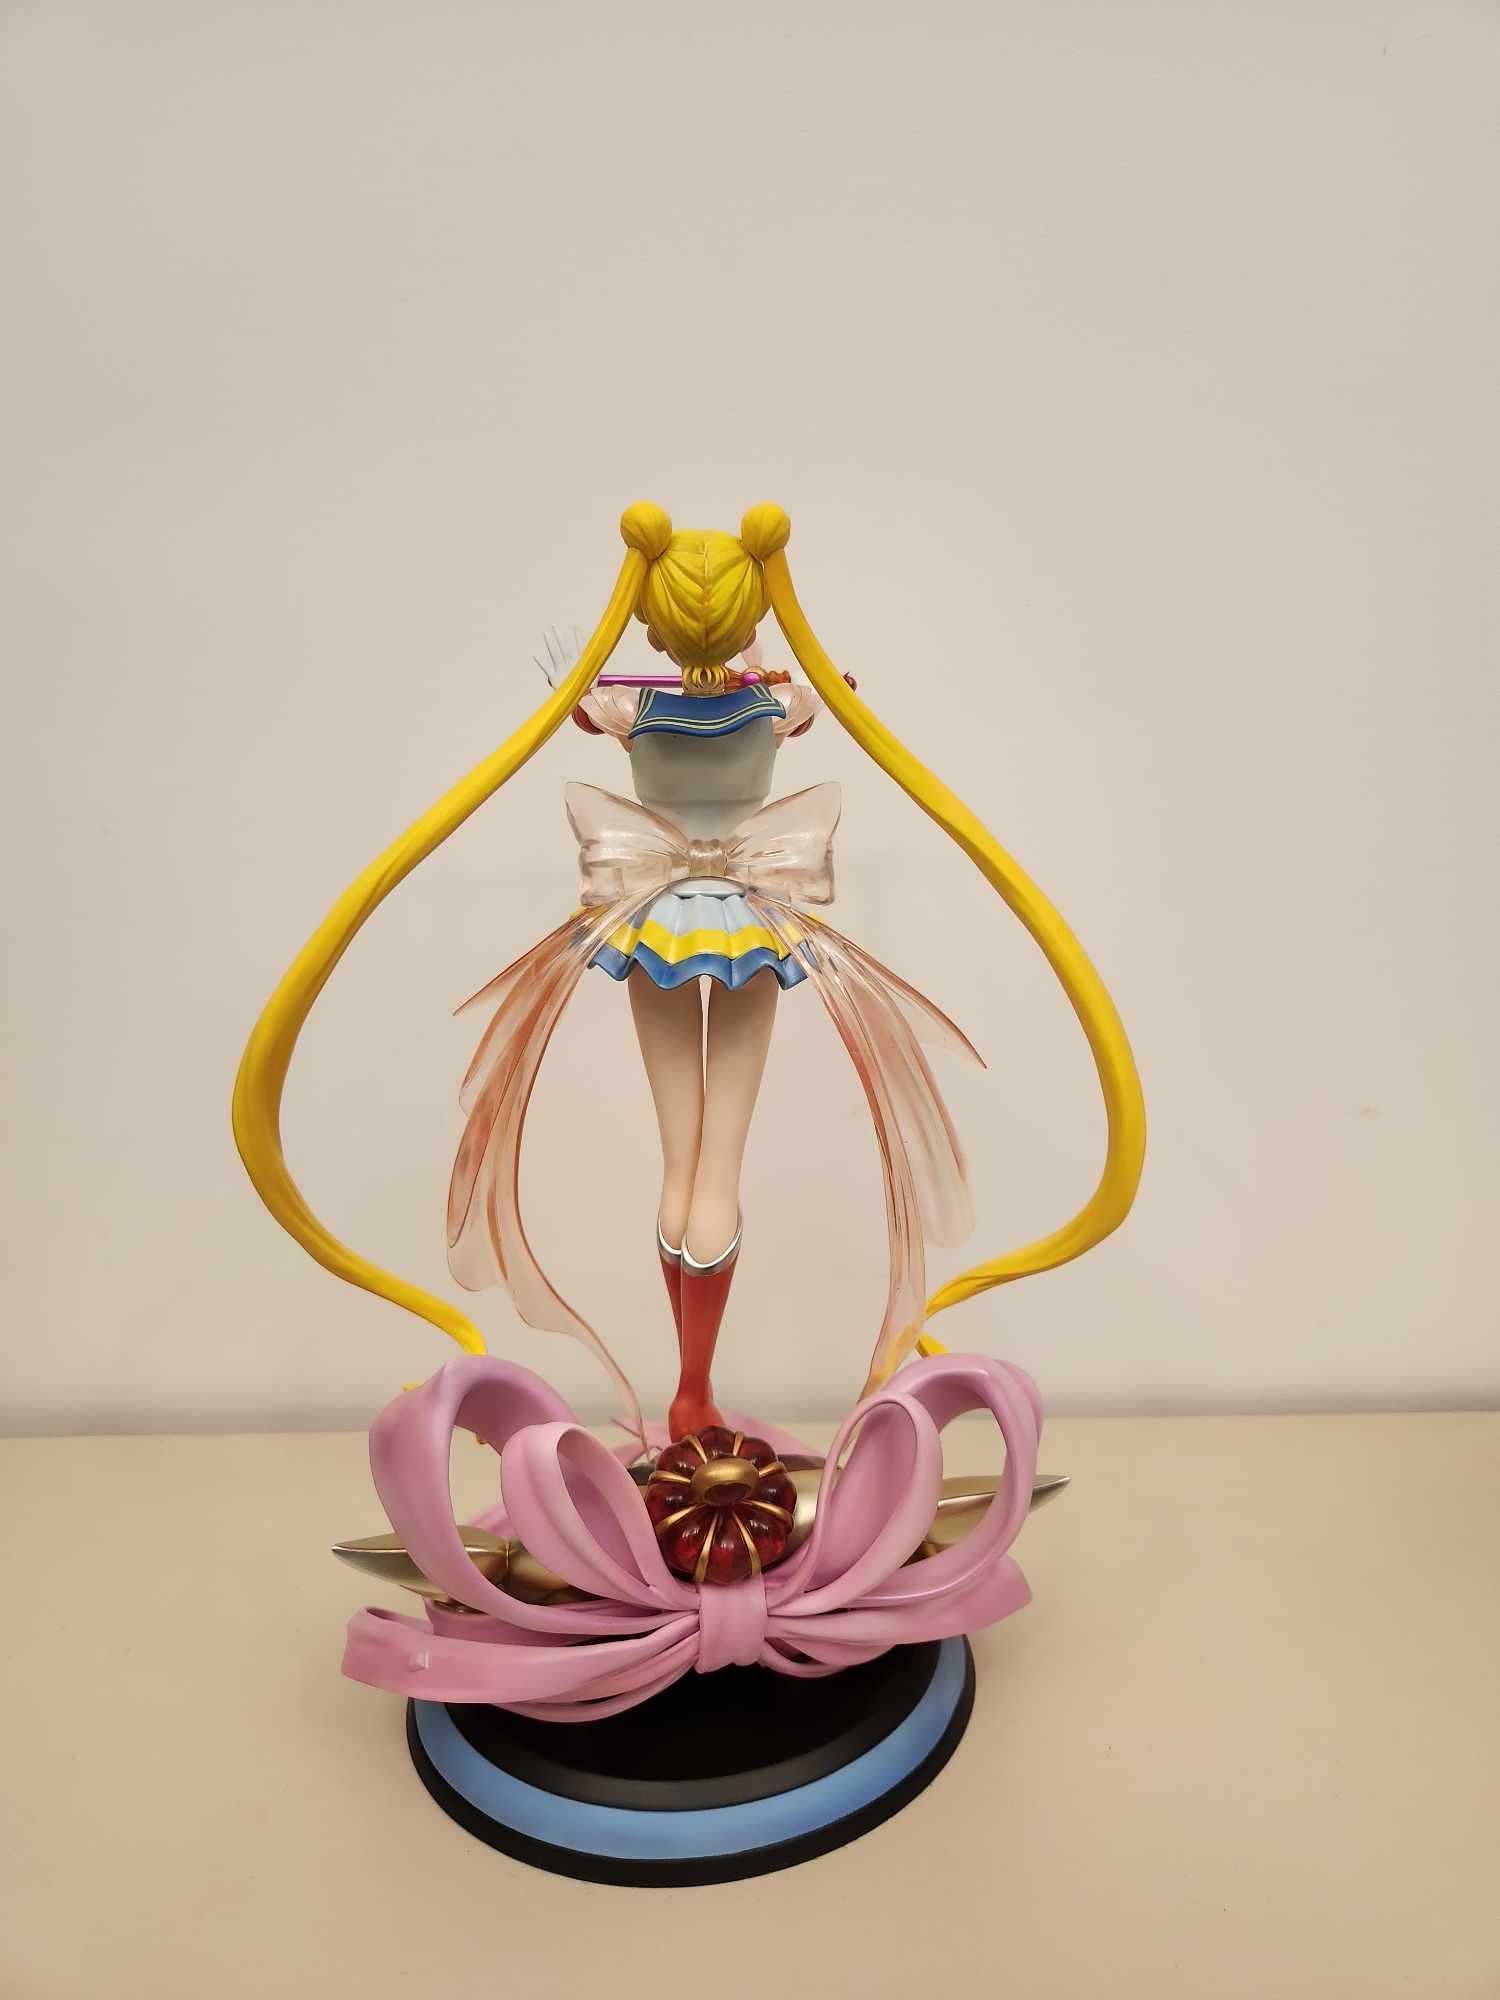 Statueta/figurina Sailor Moon